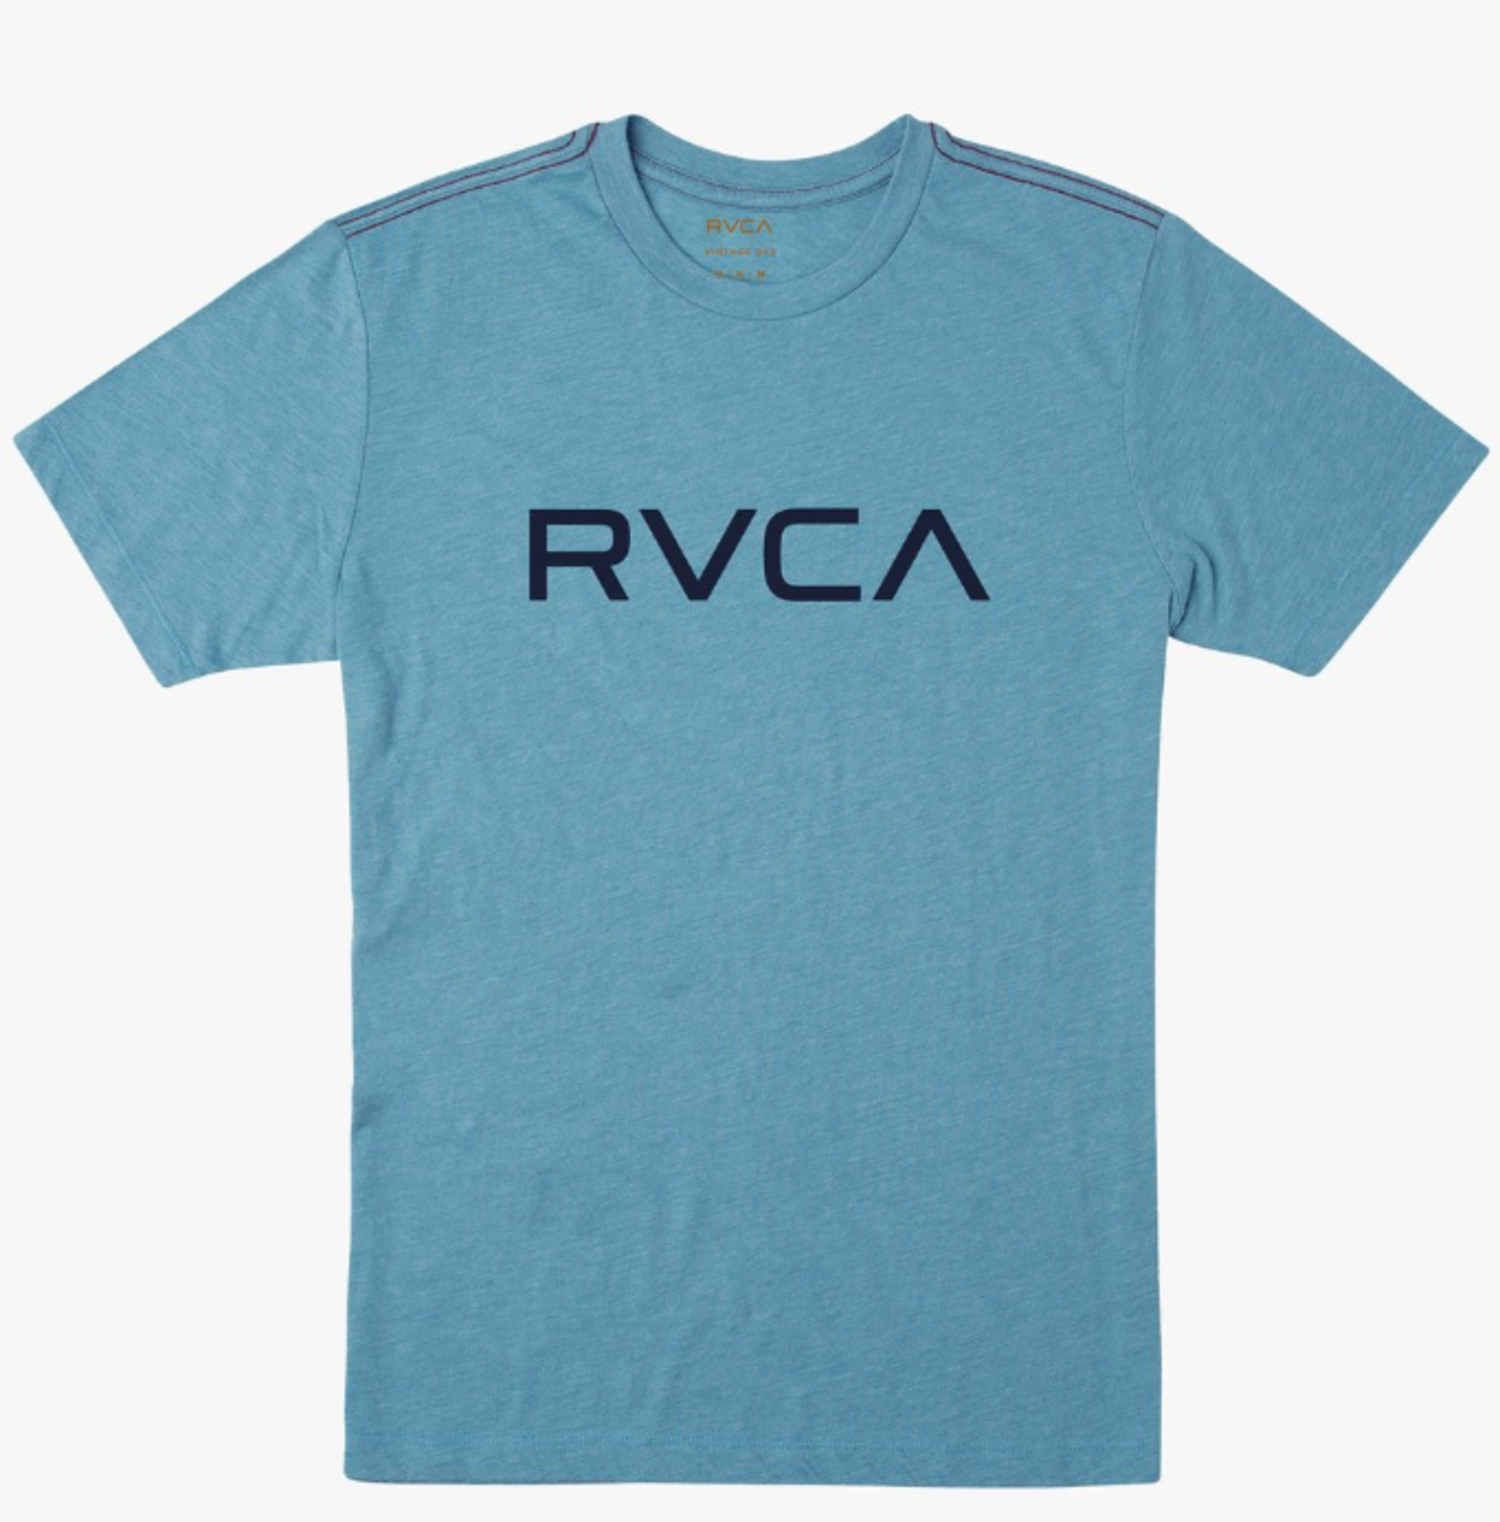 RVCA Women's Red Stitch Short Sleeve Graphic Tee Shirt 